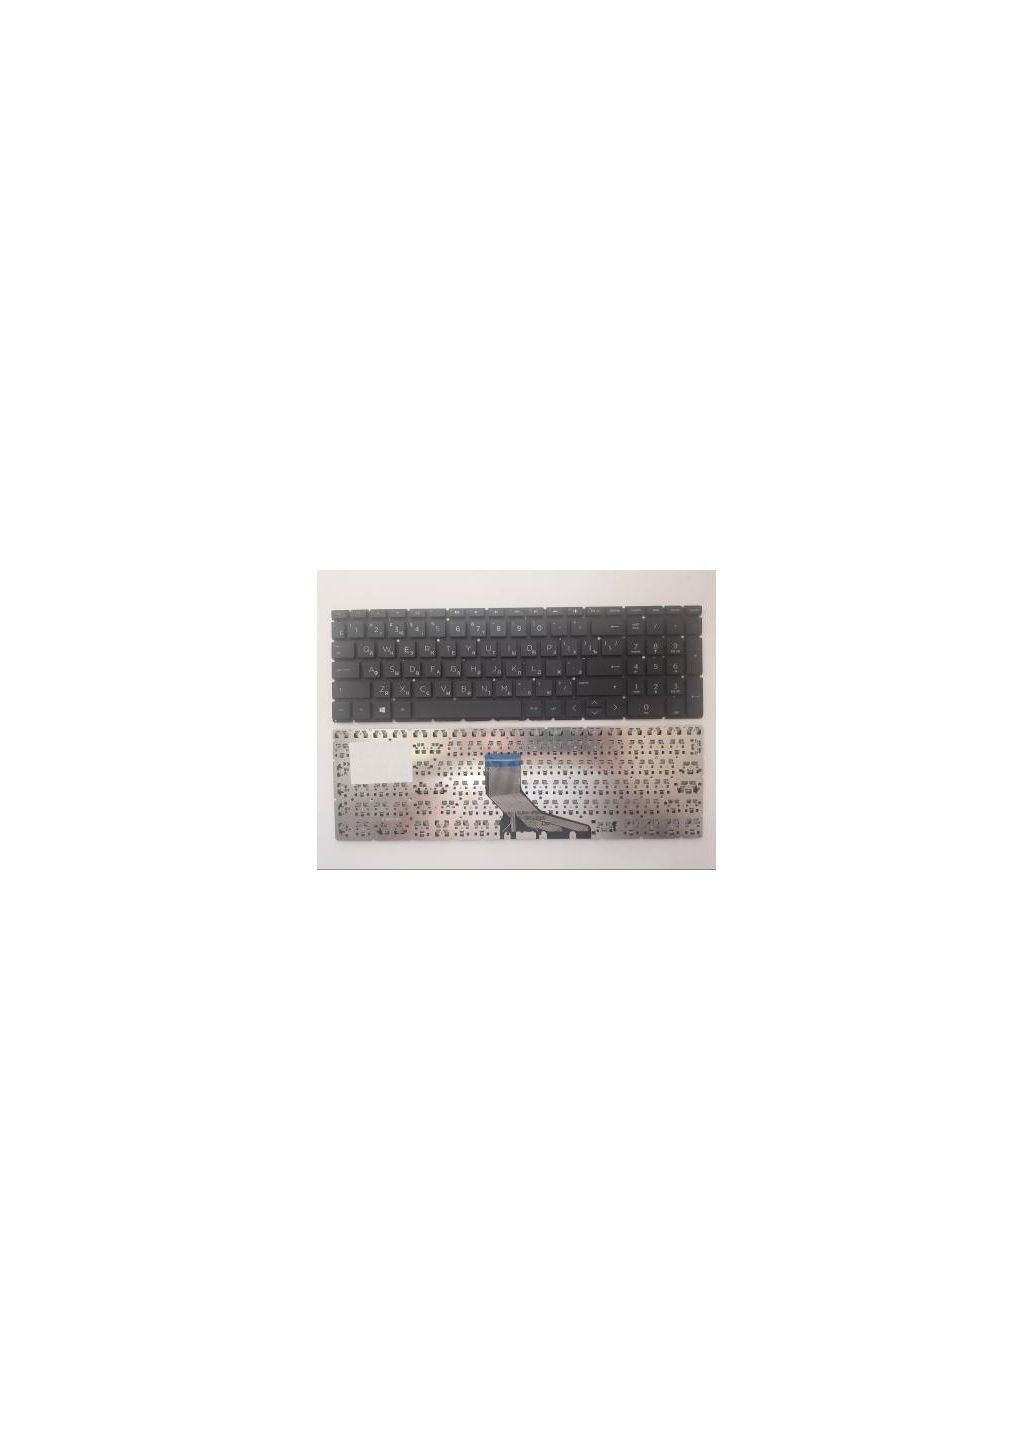 Клавиатура ноутбука Pavilion SleekBook 15DA 250 G7, 255 G7 Series черная (A46139) HP pavilion sleekbook 15-da 250 g7, 255 g7 series чер (276707616)